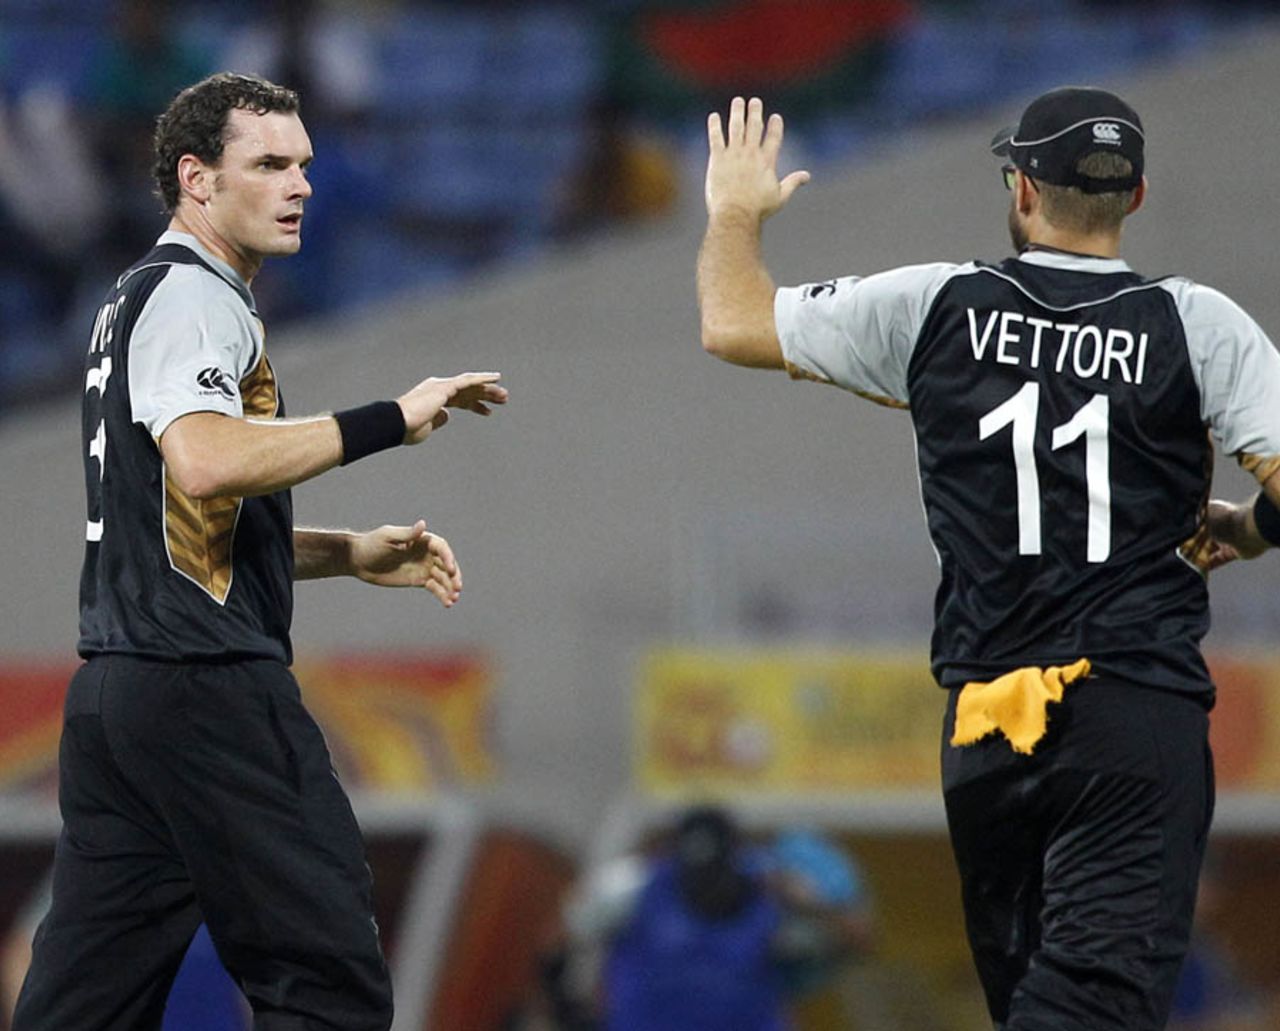 Kyle Mills celebrates a wicket with Daniel Vettori, Bangladesh v New Zealand, World Twenty20 2012, Group D, Pallekele, September 21, 2012